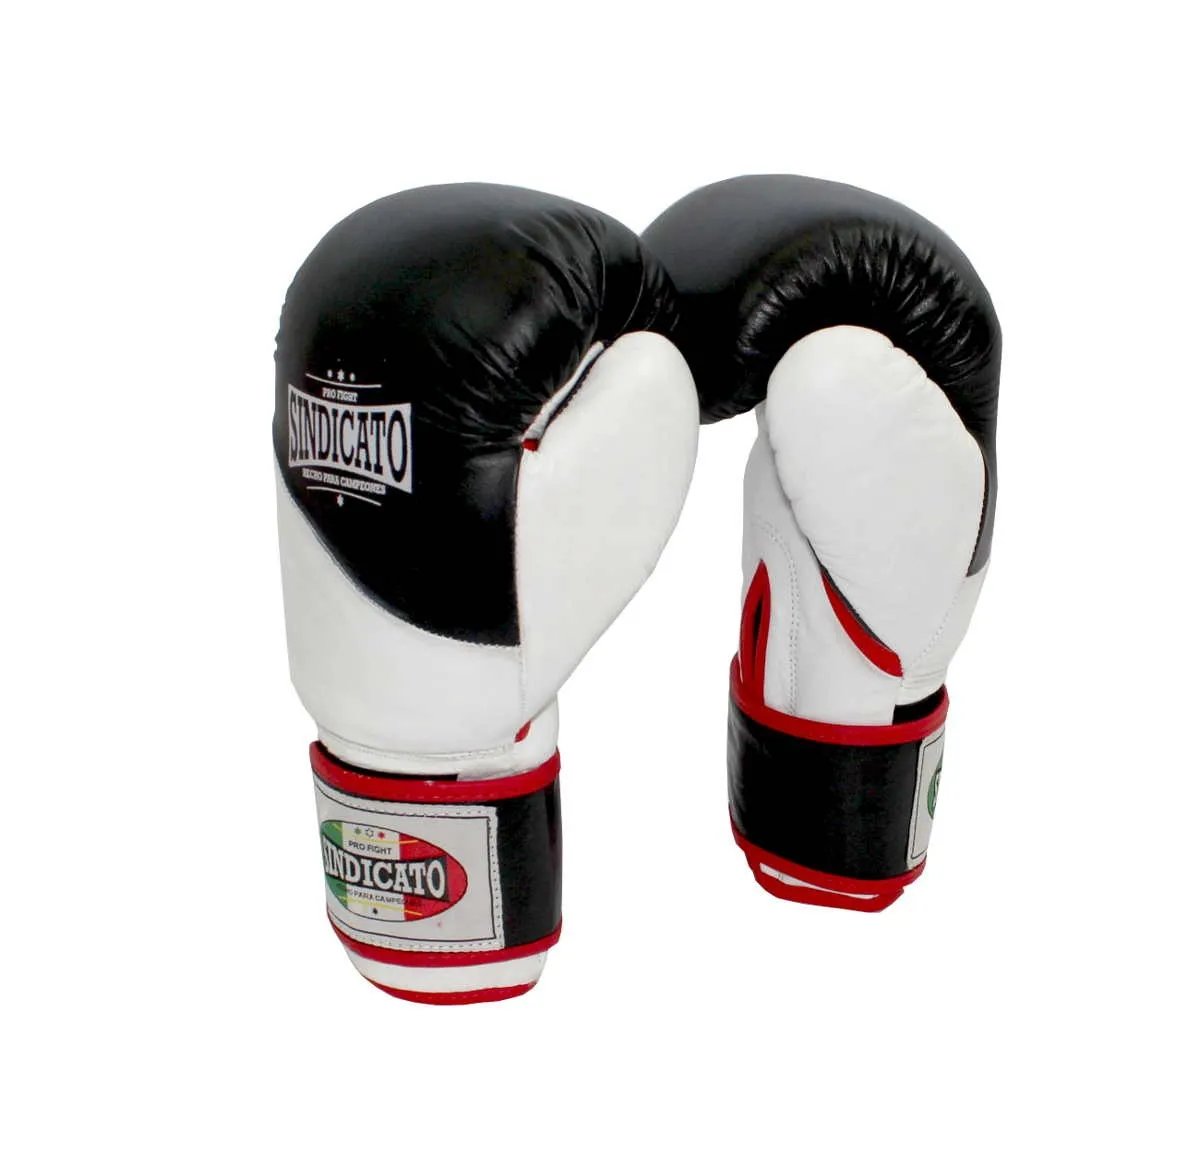 Boxing gloves Sindicato leather black/white